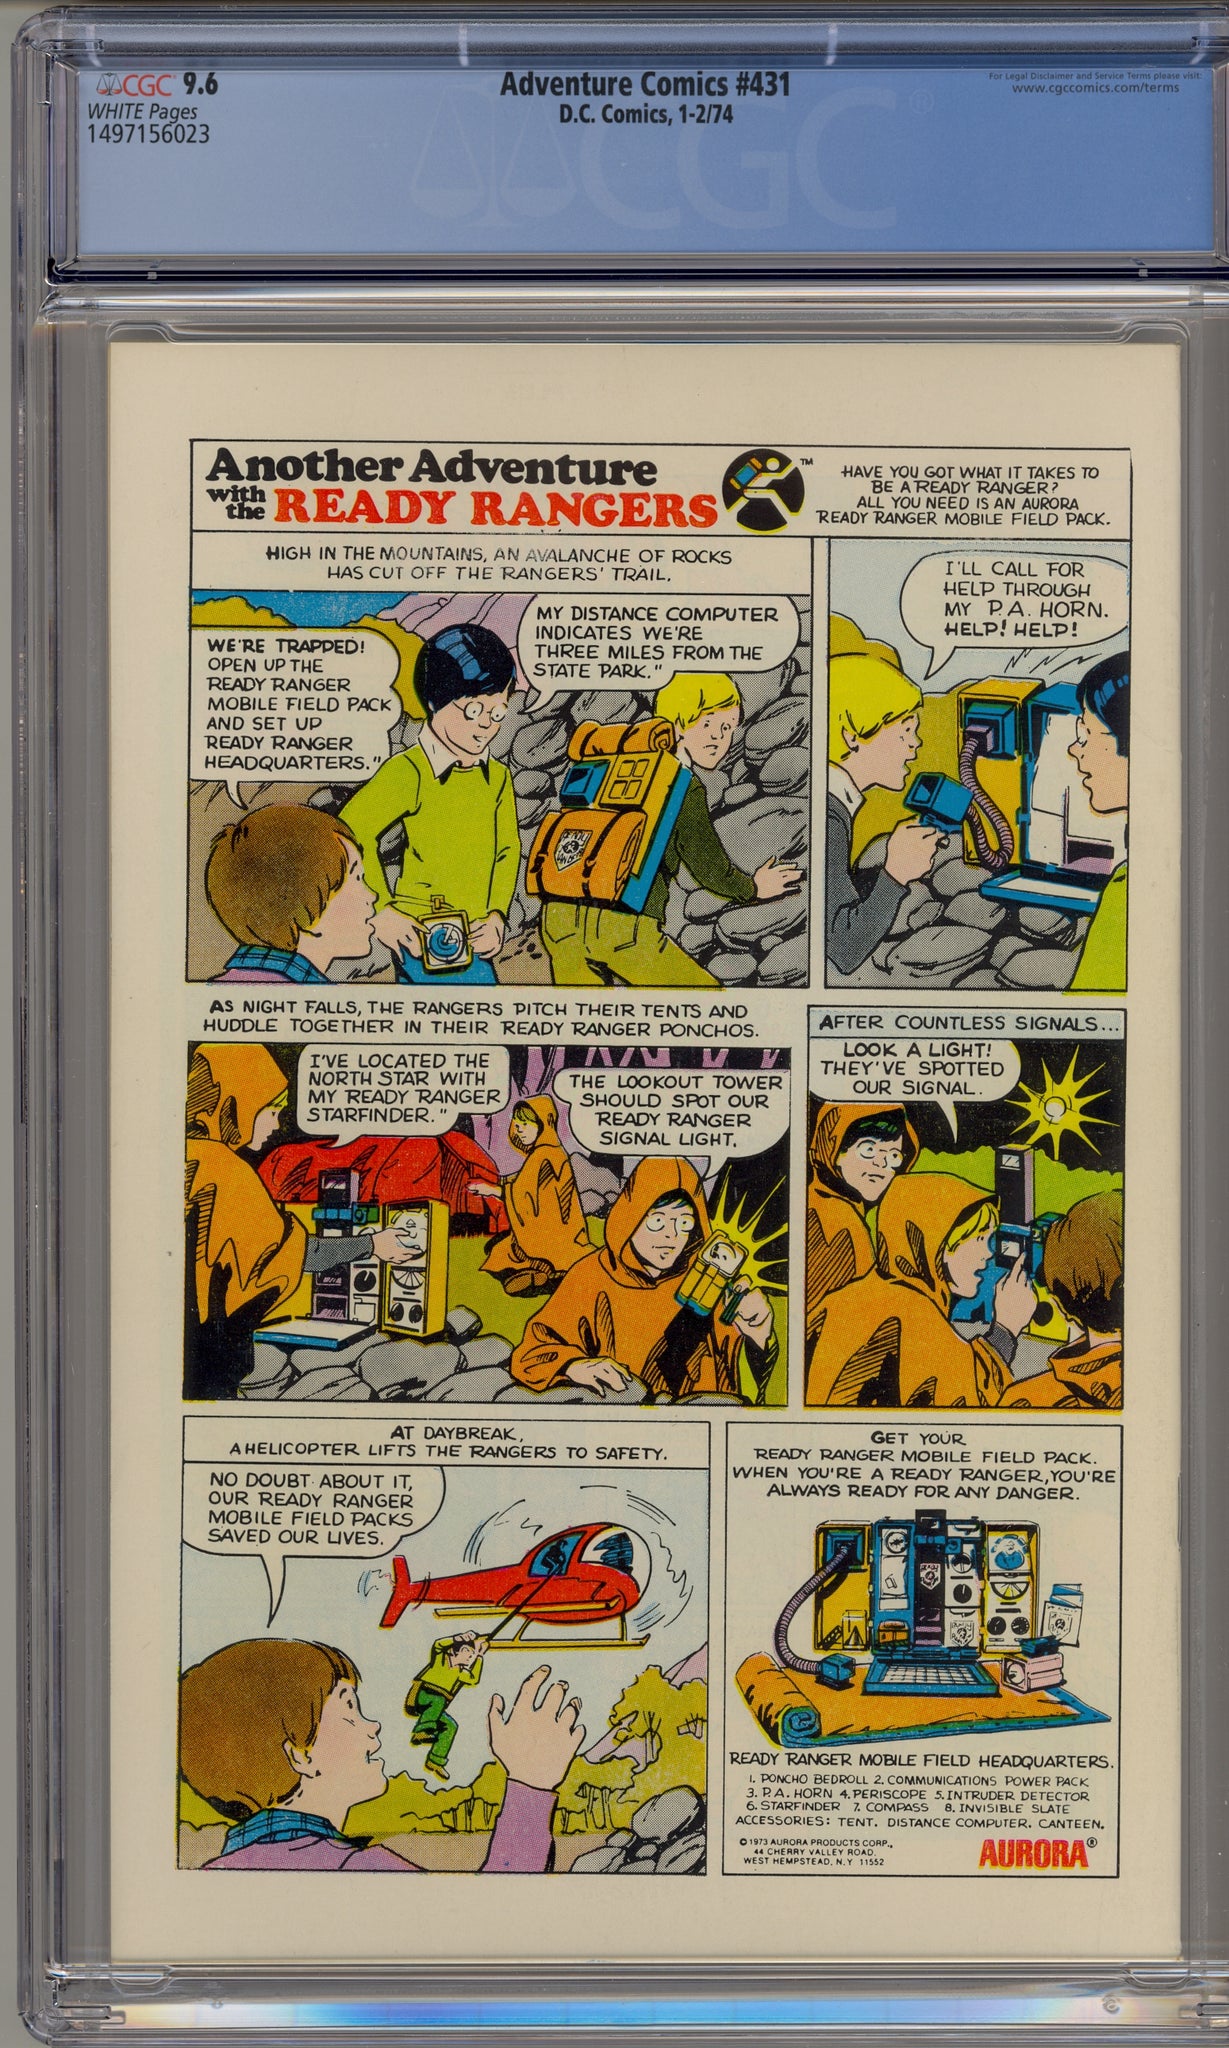 Adventure Comics #431 (1974) Spectre